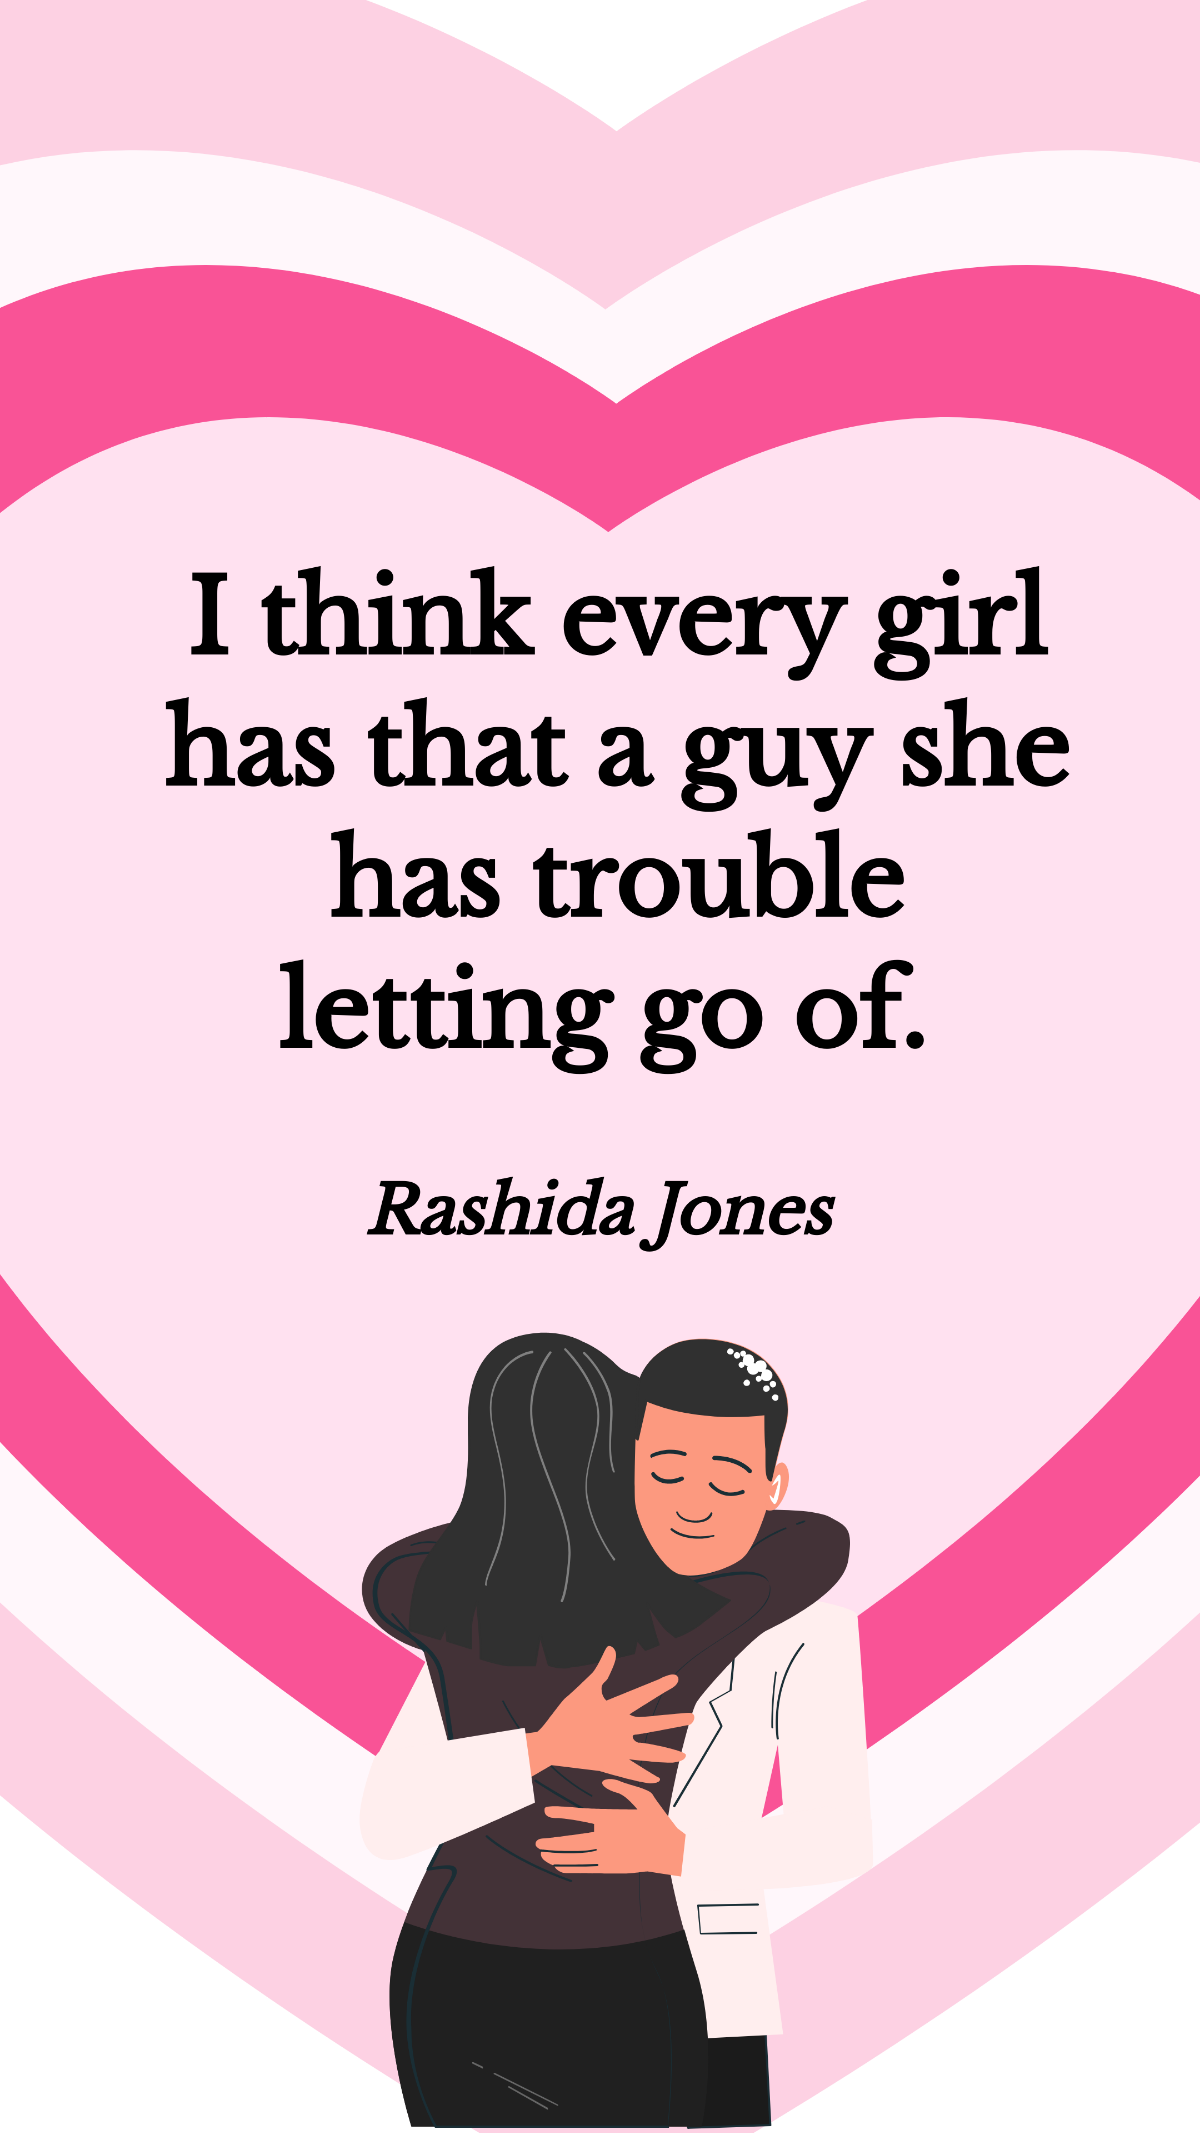 Free Rashida Jones - I think every girl has that a guy she has trouble letting go of. Template